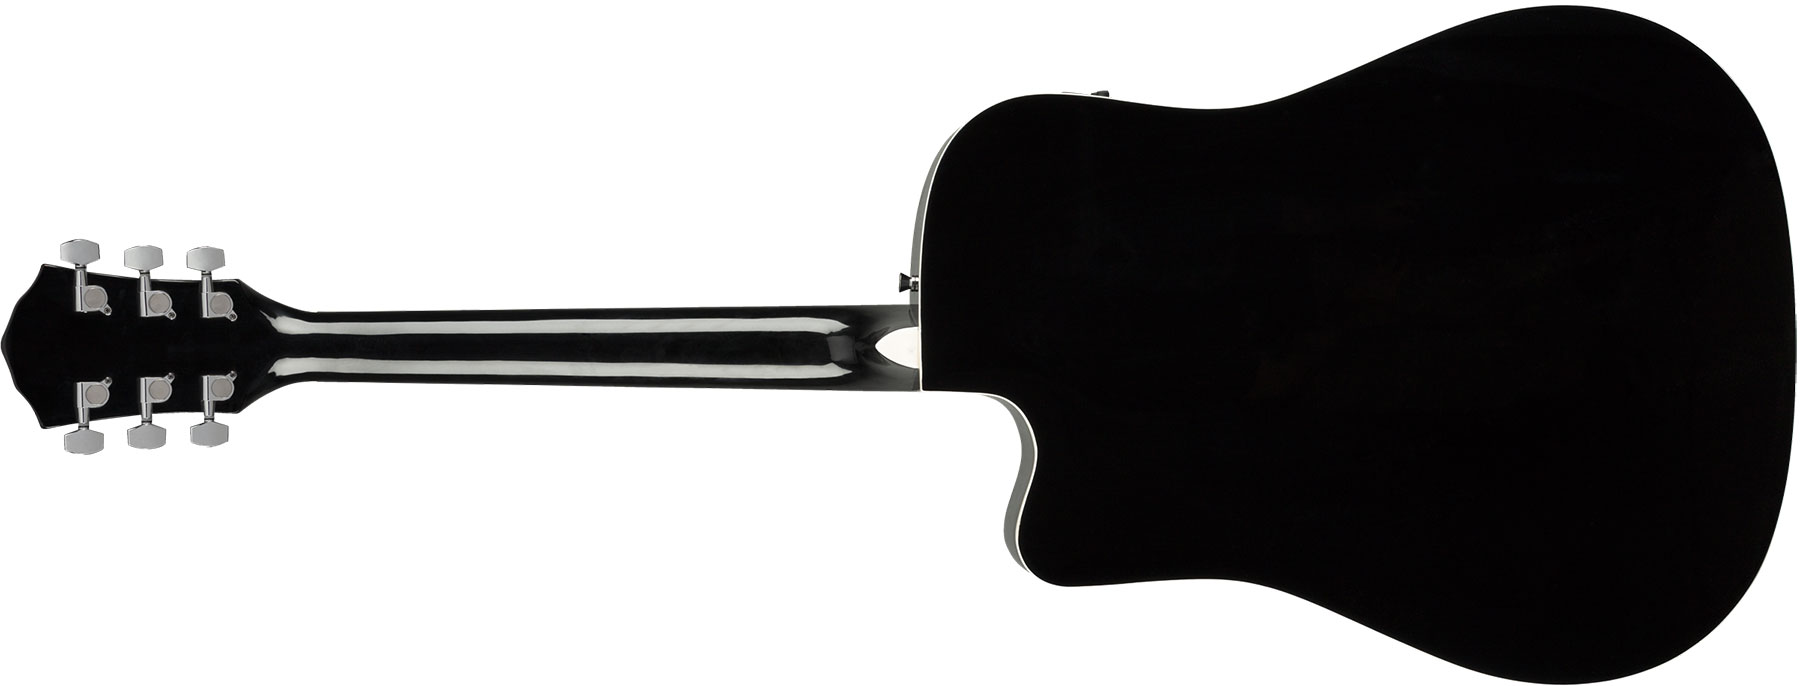 Fender Fa-125ce Dreadnought Alternative Epicea Acajou Wal - Black - Electro acoustic guitar - Variation 1